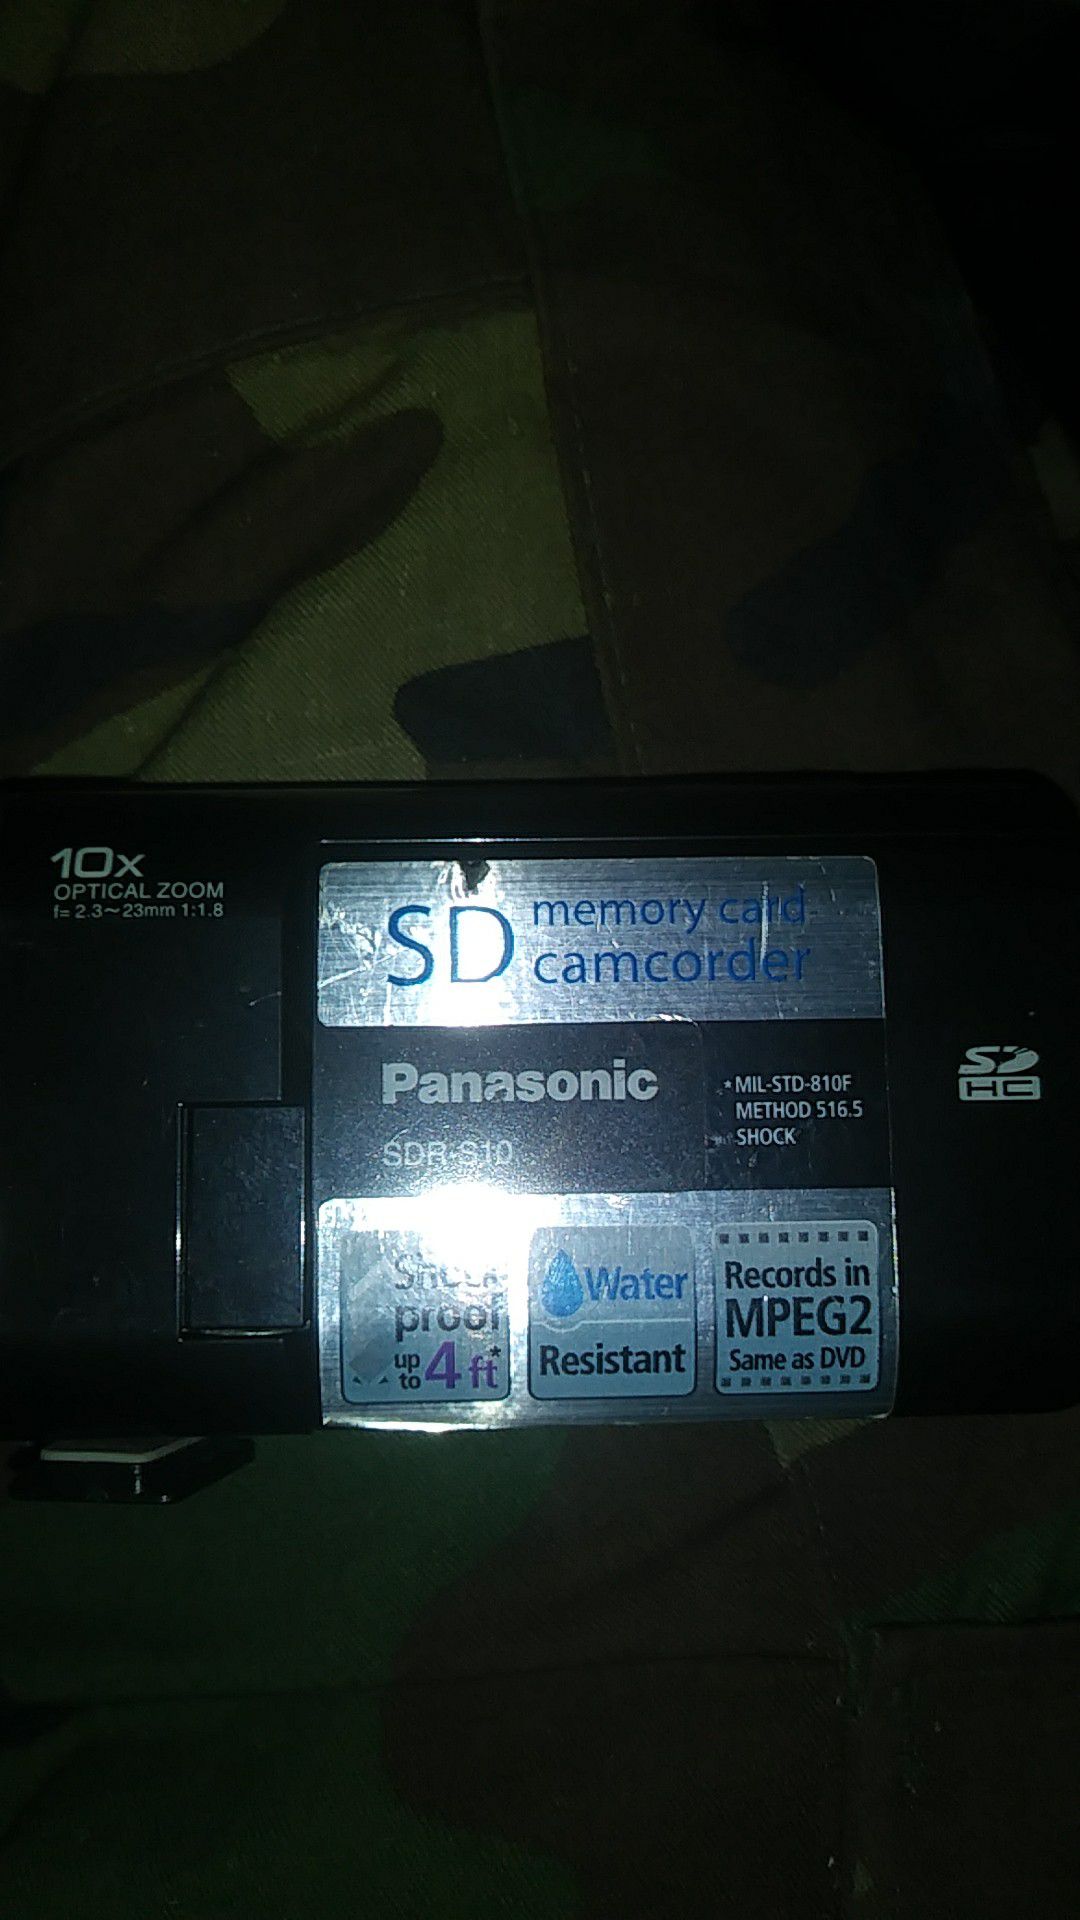 Panasonic SDR-S10 SD memory card CAMCORDER 10x optical zoom